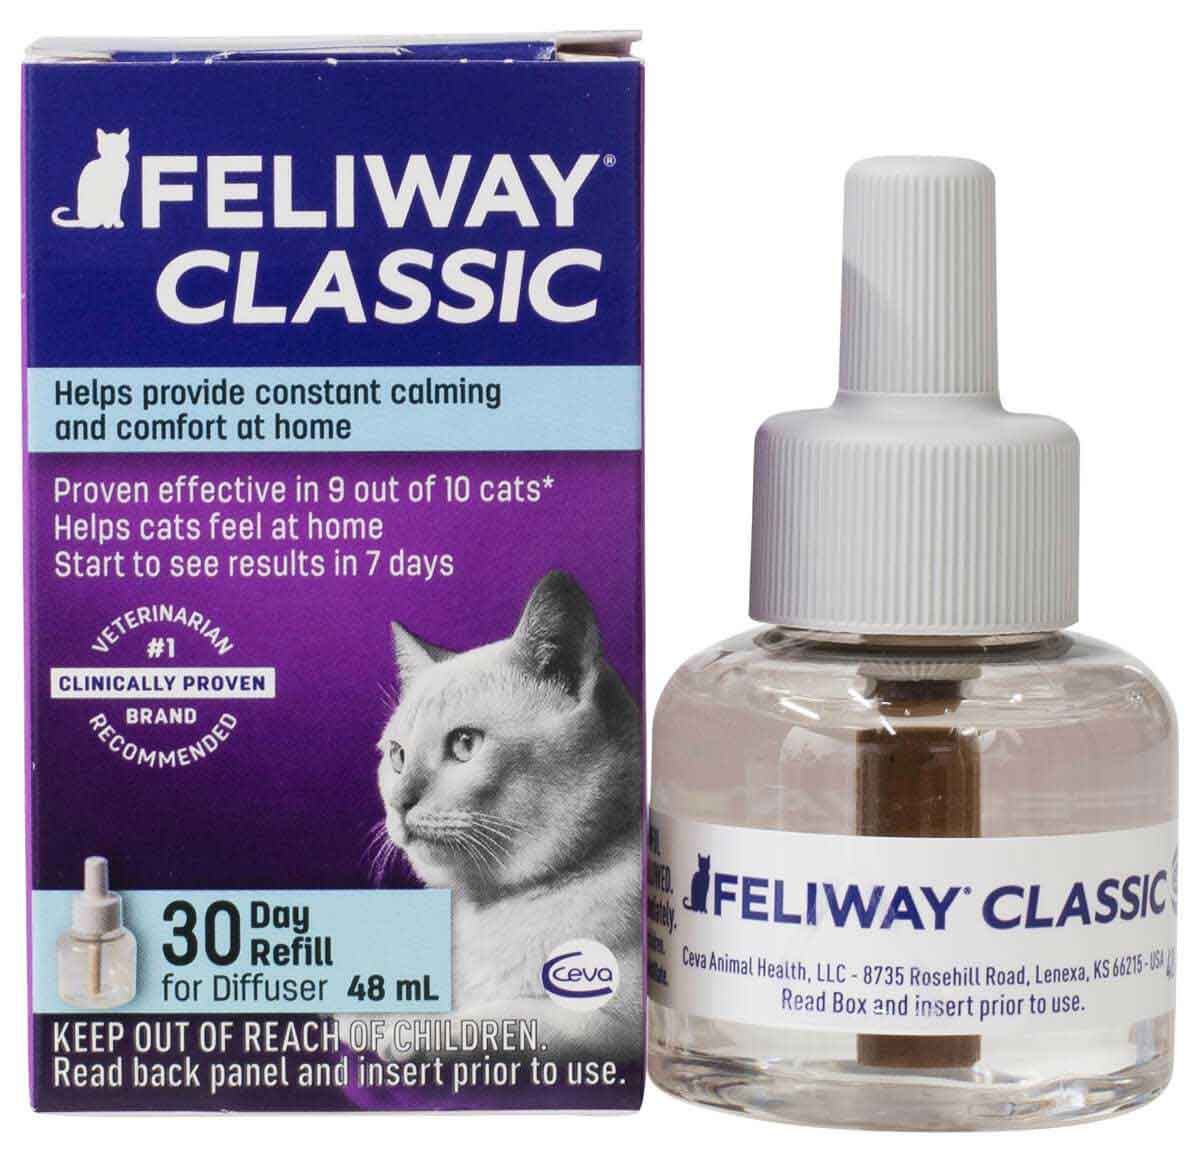 Feliway - Diffuser Refill (48ml) 